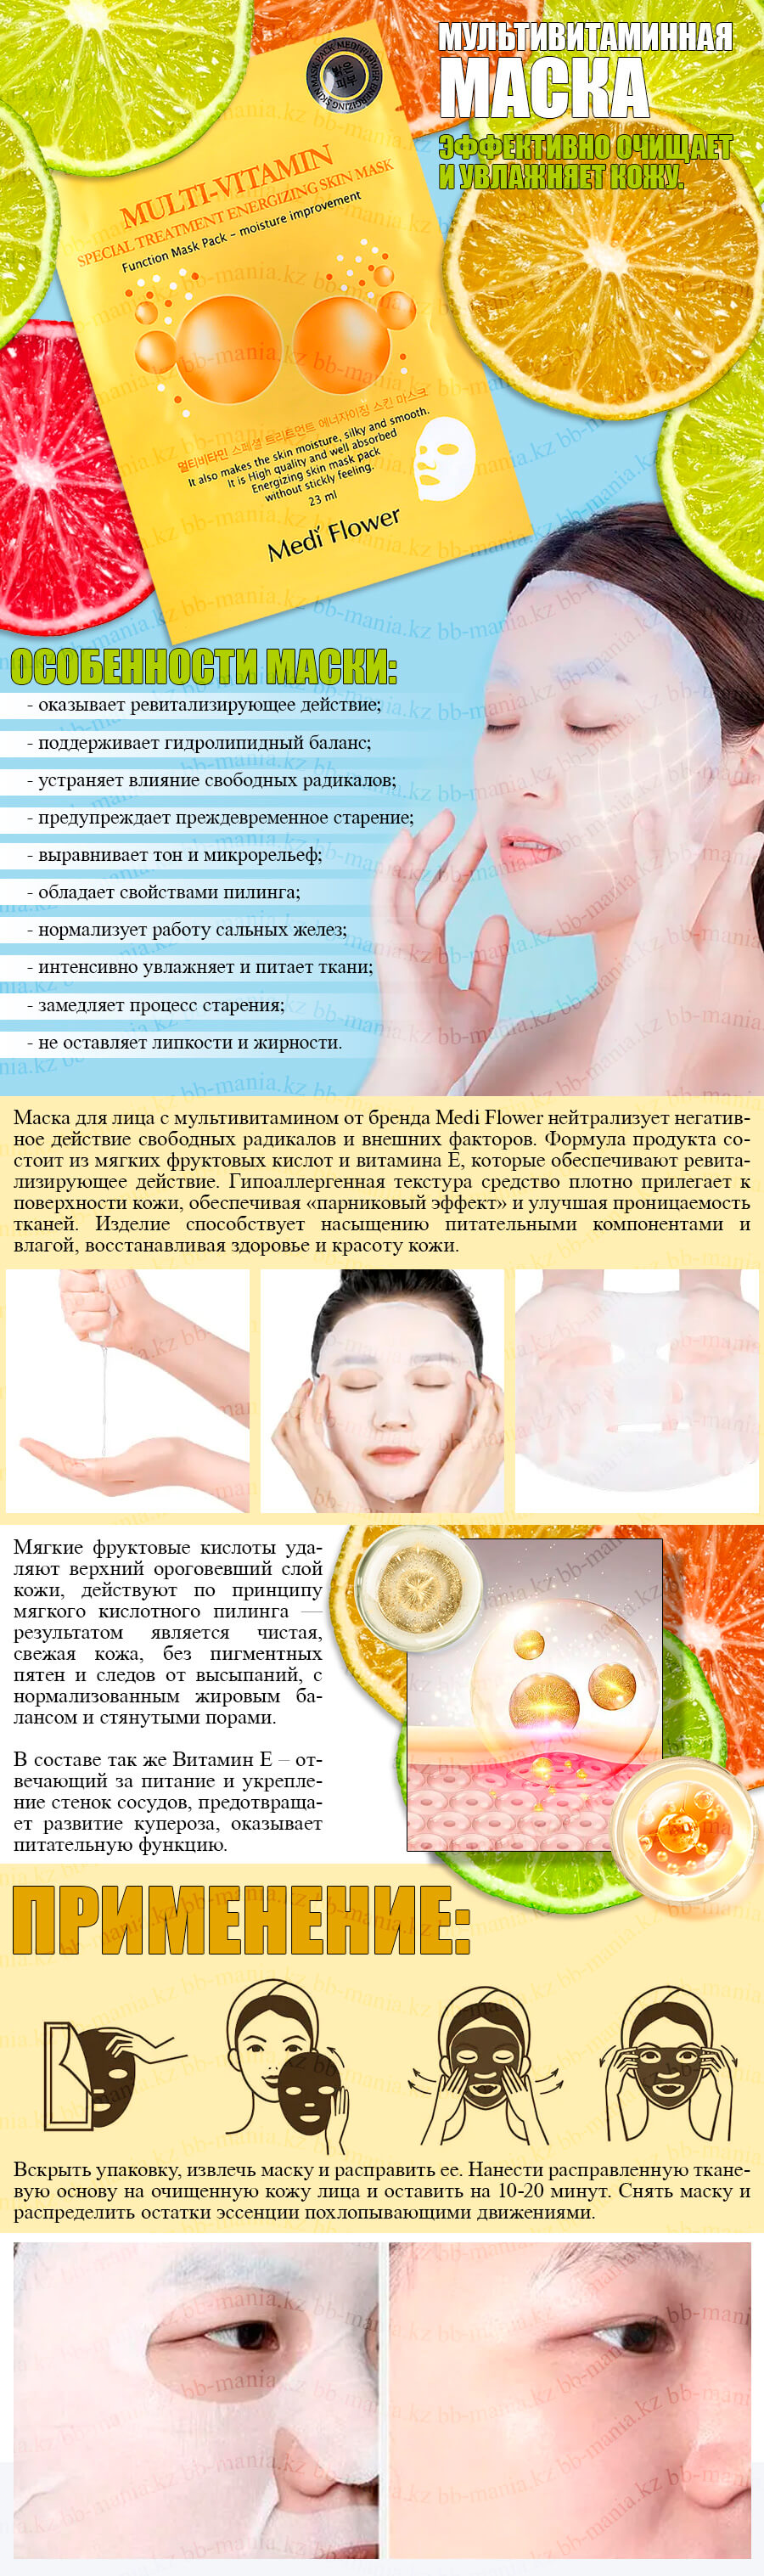 multivitamin_special_treatment_energizing_skin_mask_medi_flower